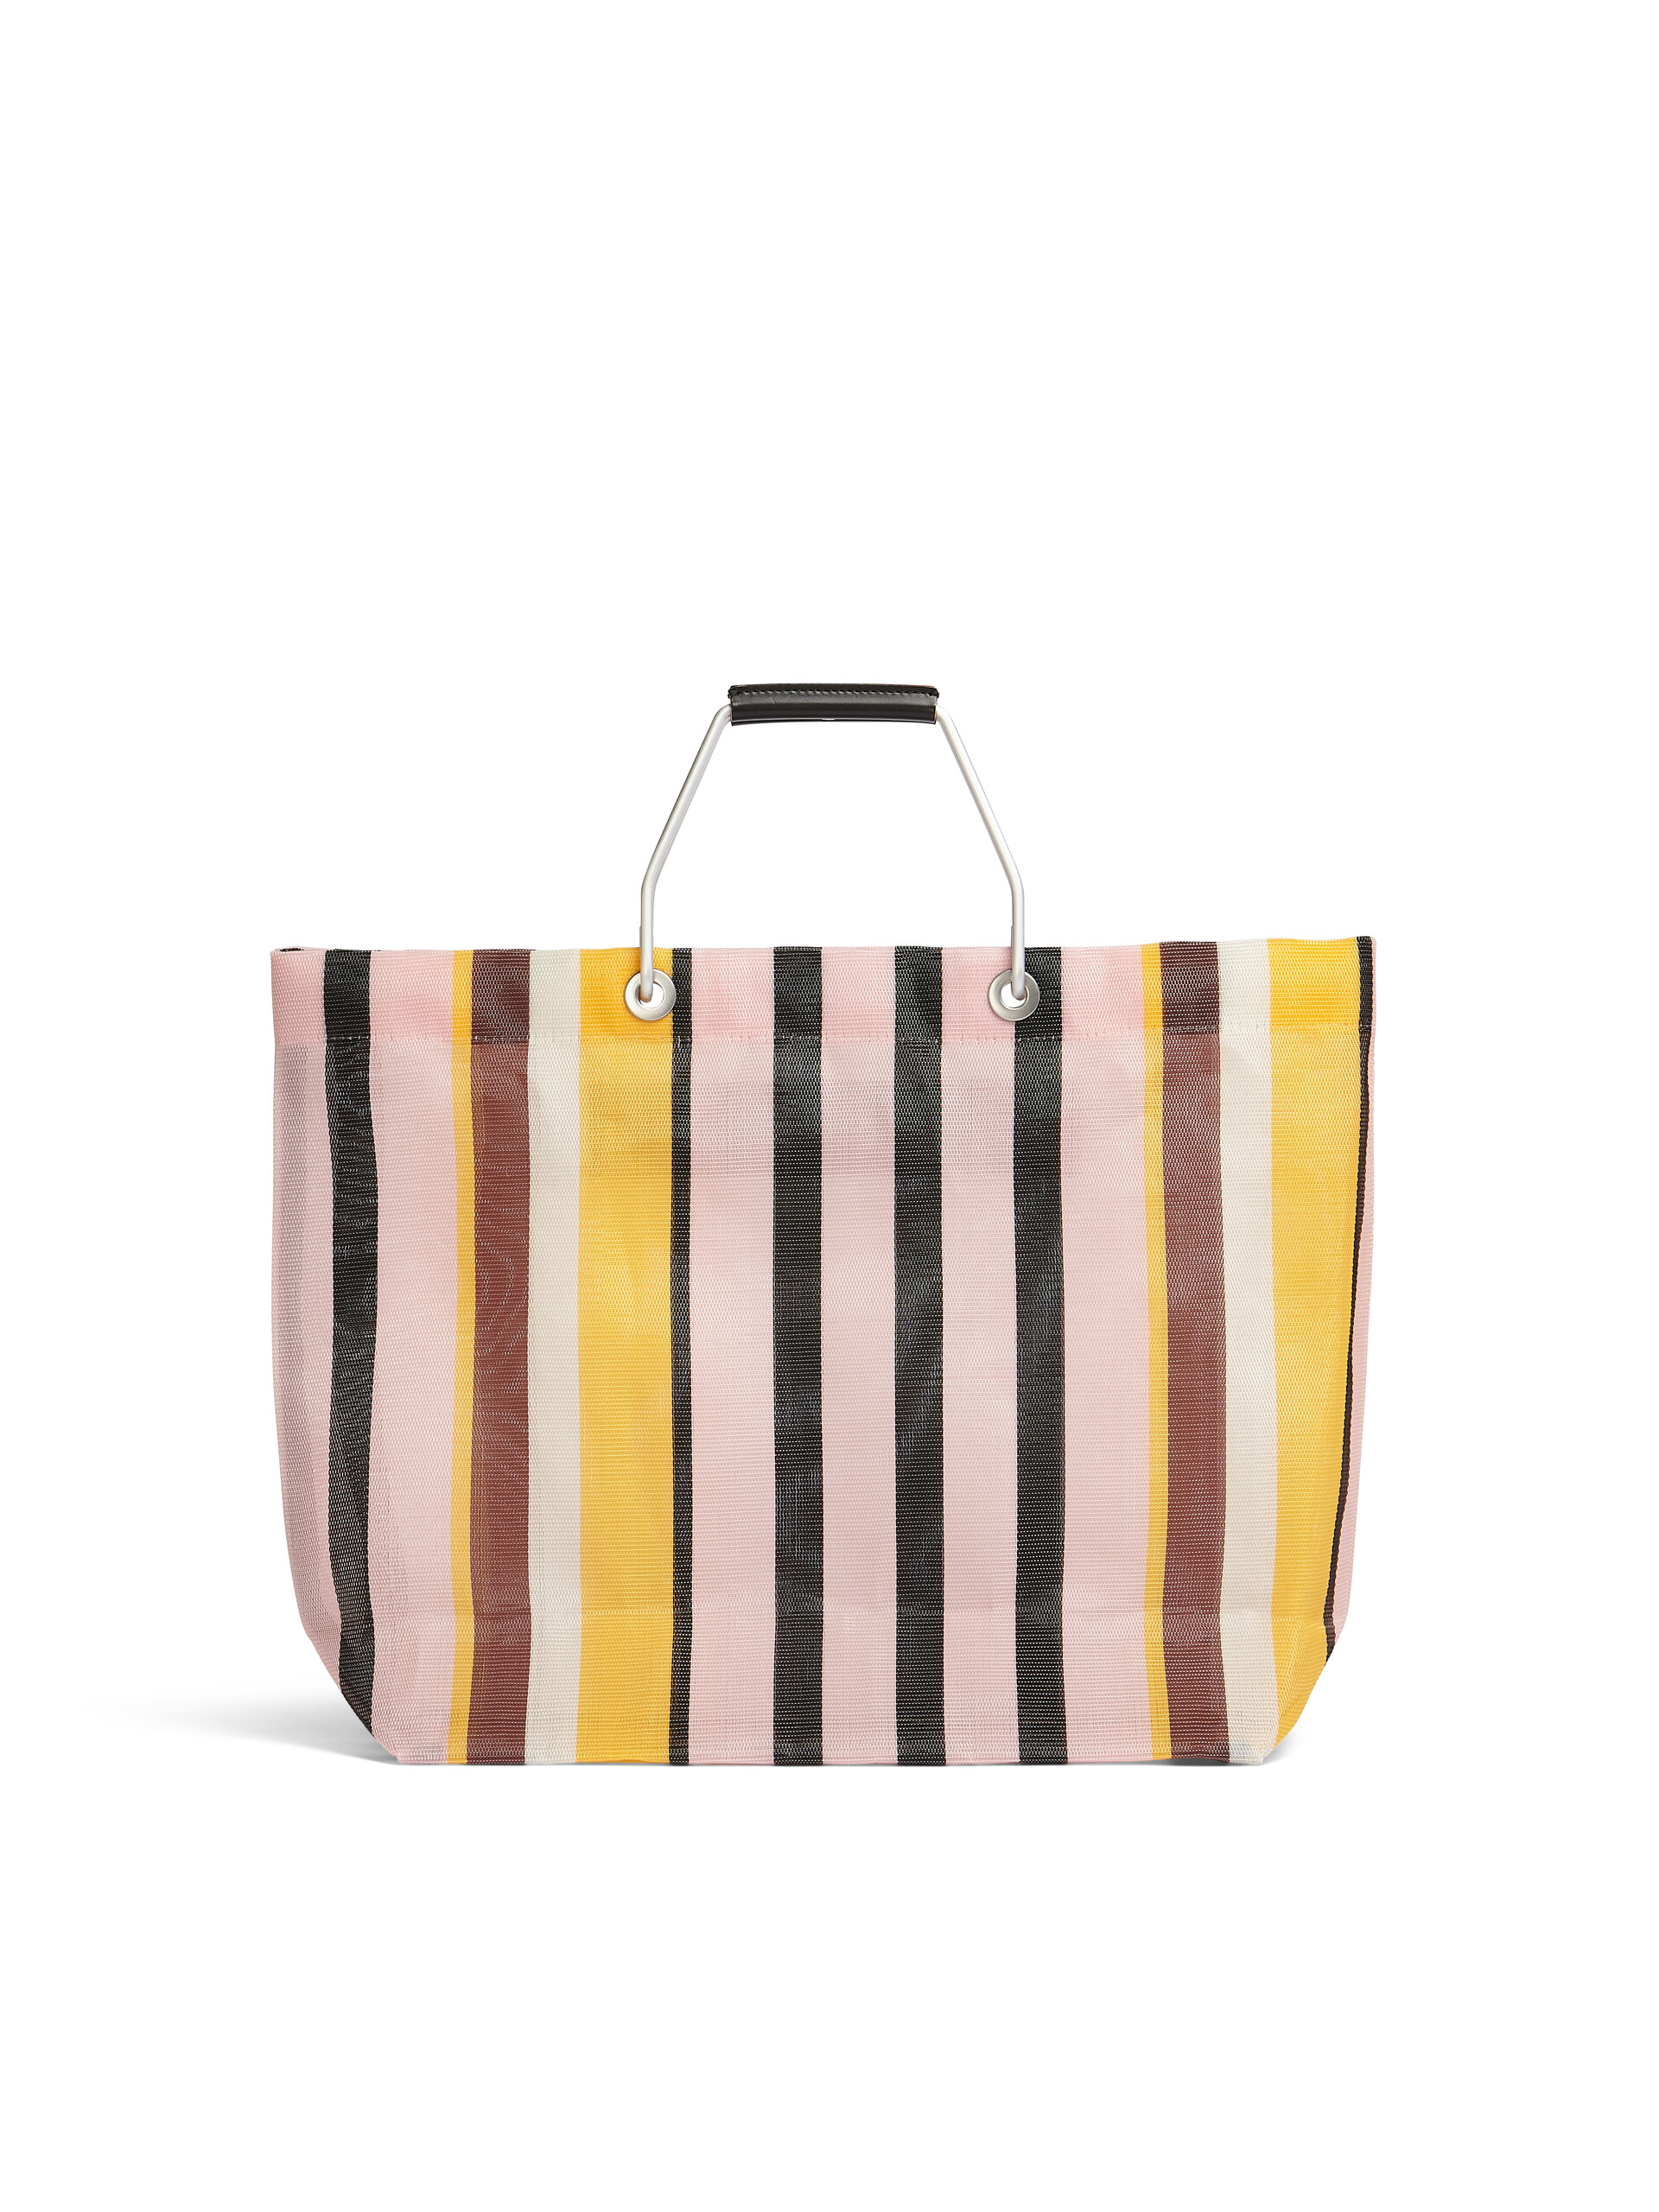 MARNI MARKET STRIPE multicolor pink bag - Shopping Bags - Image 3